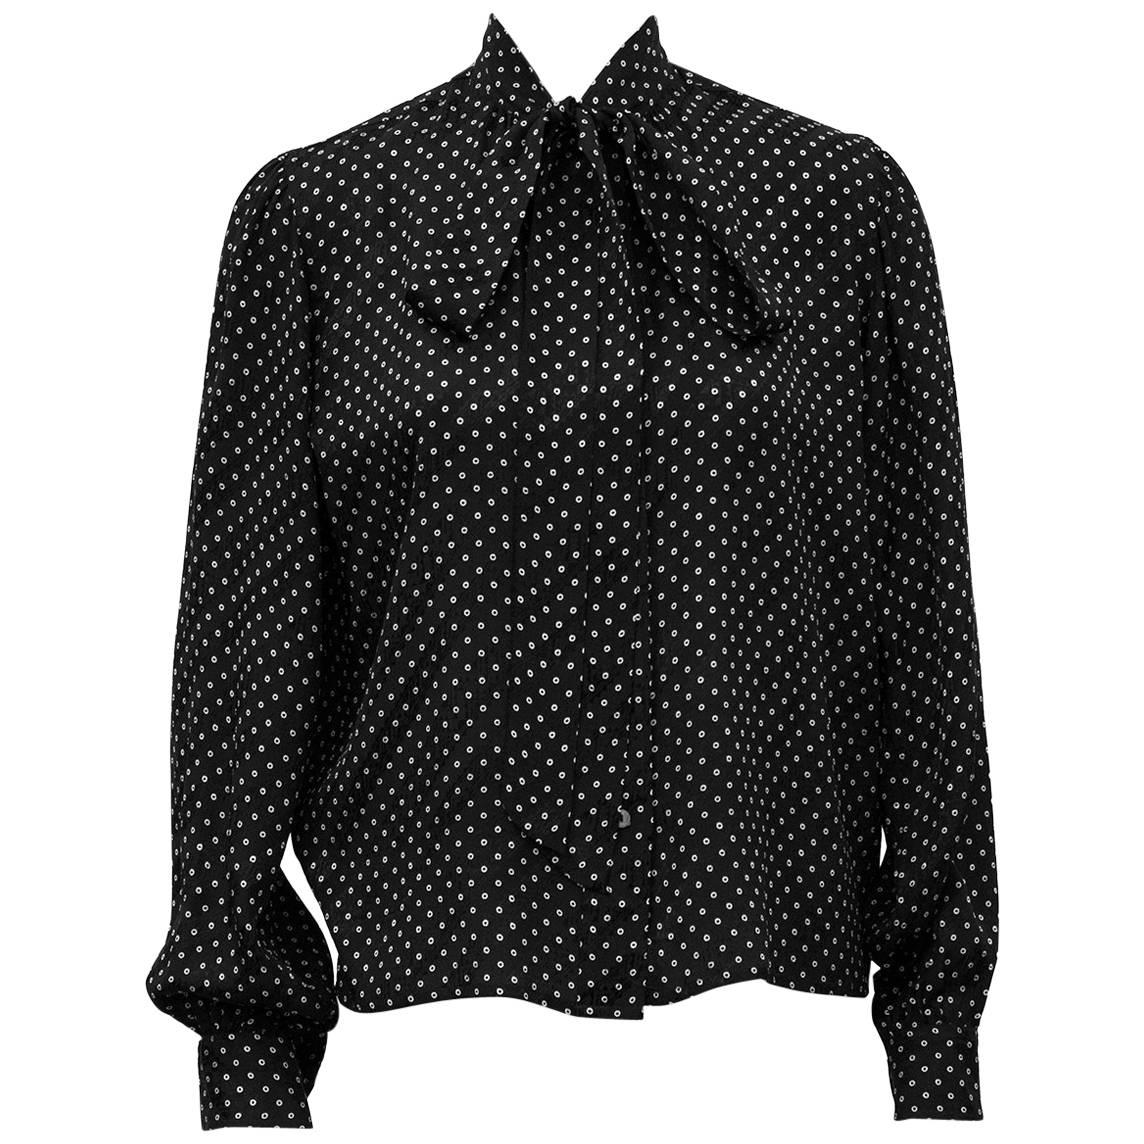 1980s Yves Saint Laurent/YSL Black and White Polka Dot Silk Shirt